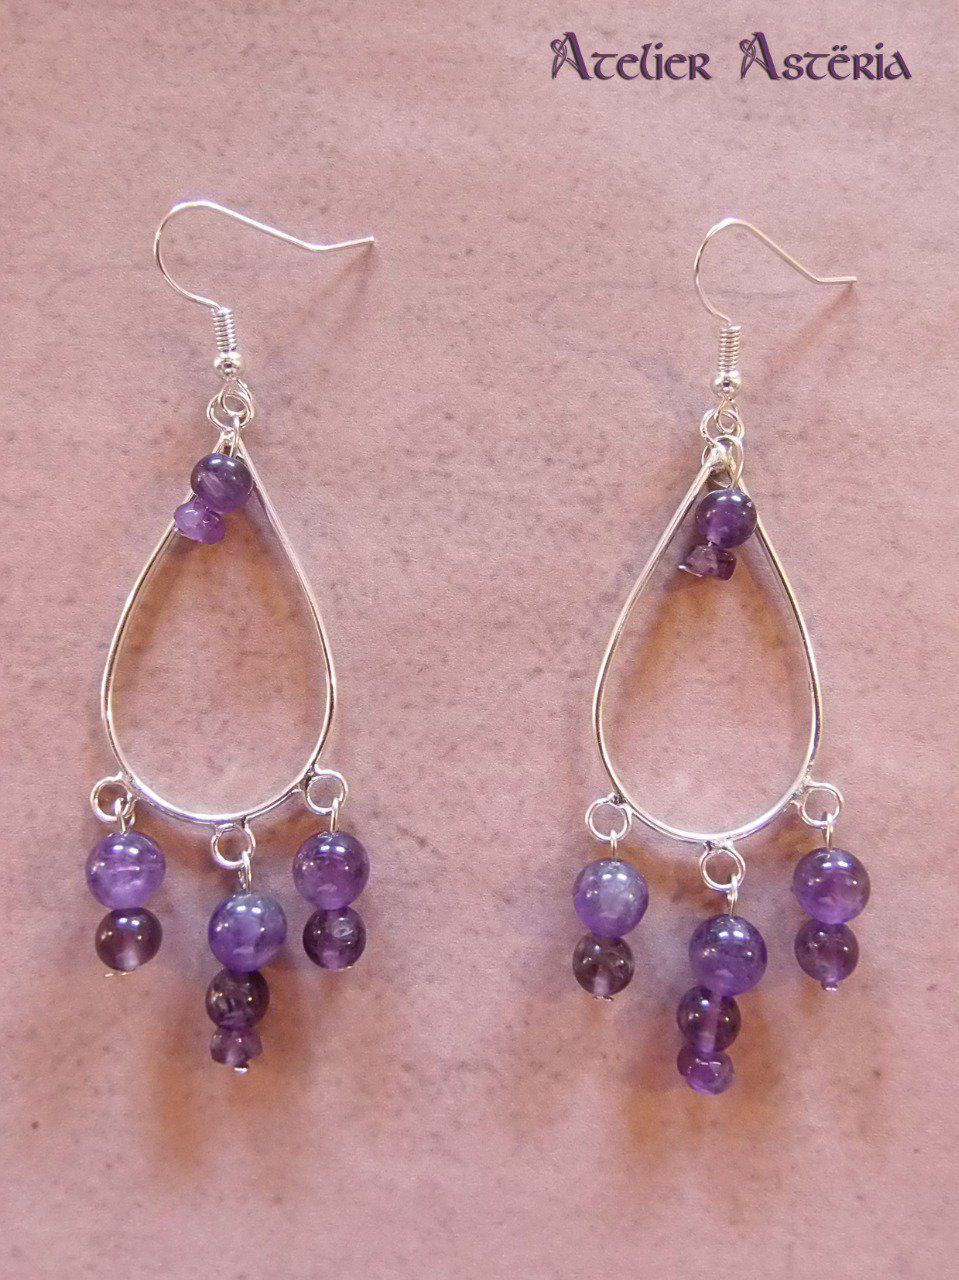 Farfarelli : boucles d’oreille chandelier pierres semi-précieuses / gemstones chandelier earrings